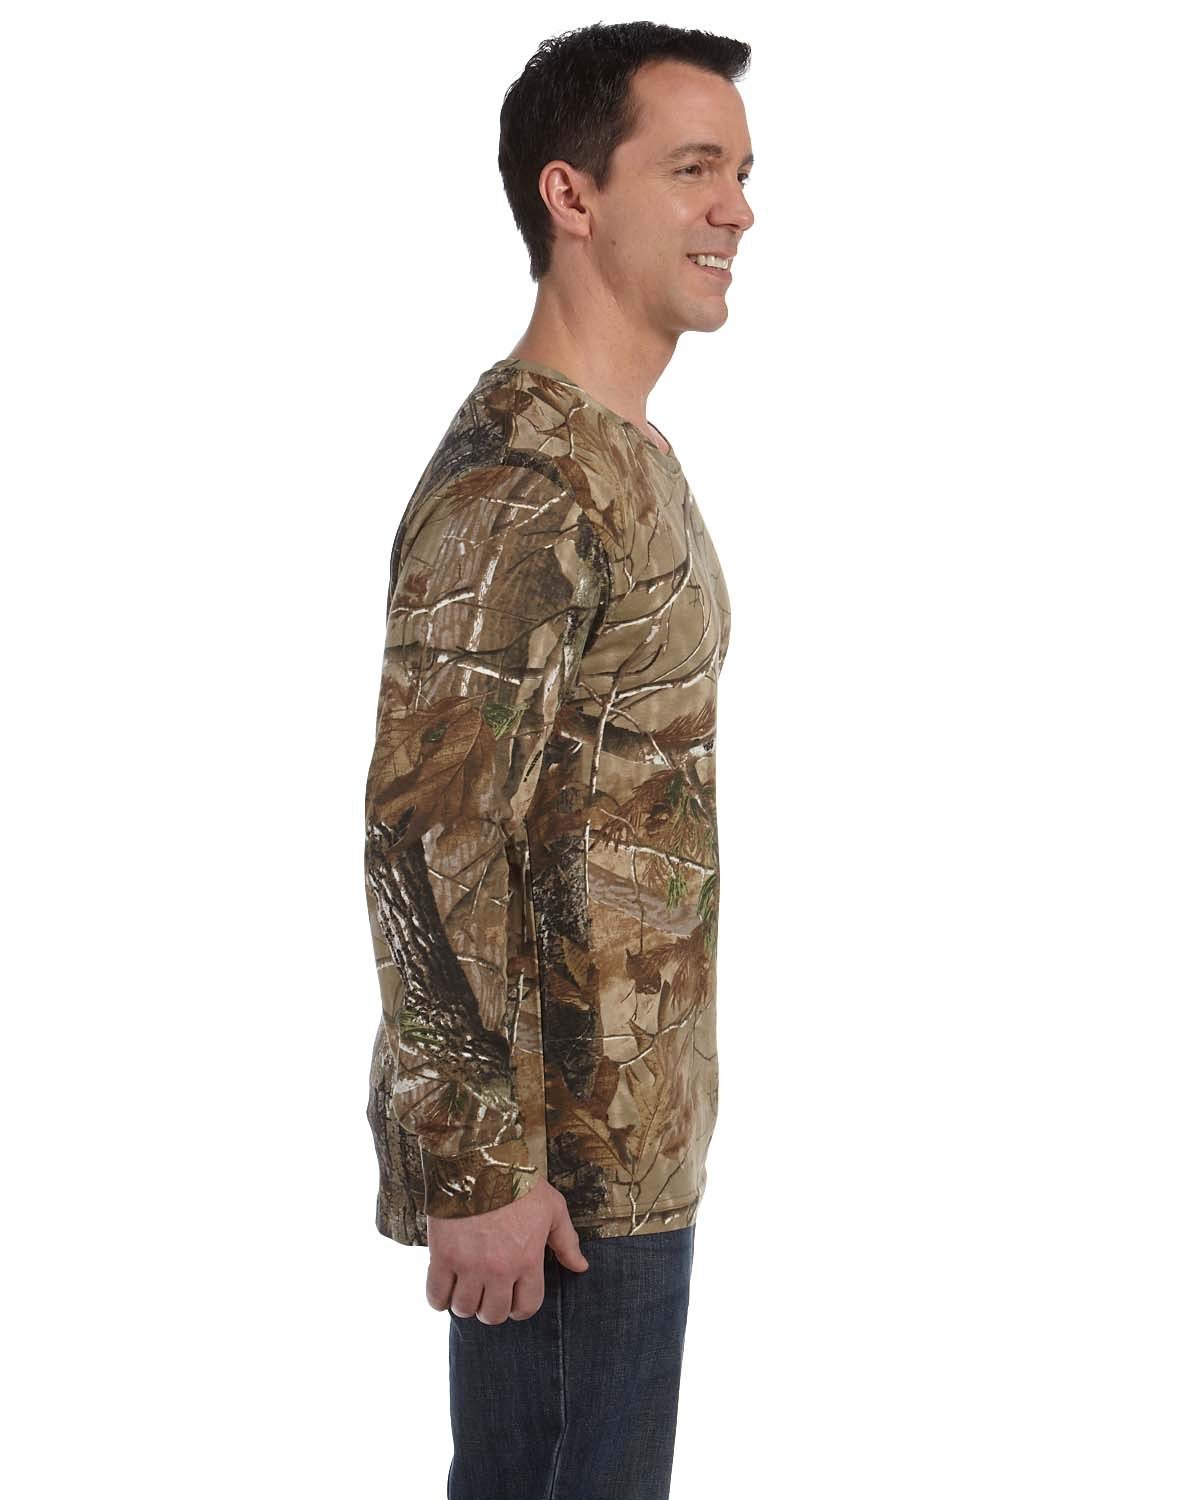 Code Five Men's Realtree Camo Long-Sleeve T-Shirt